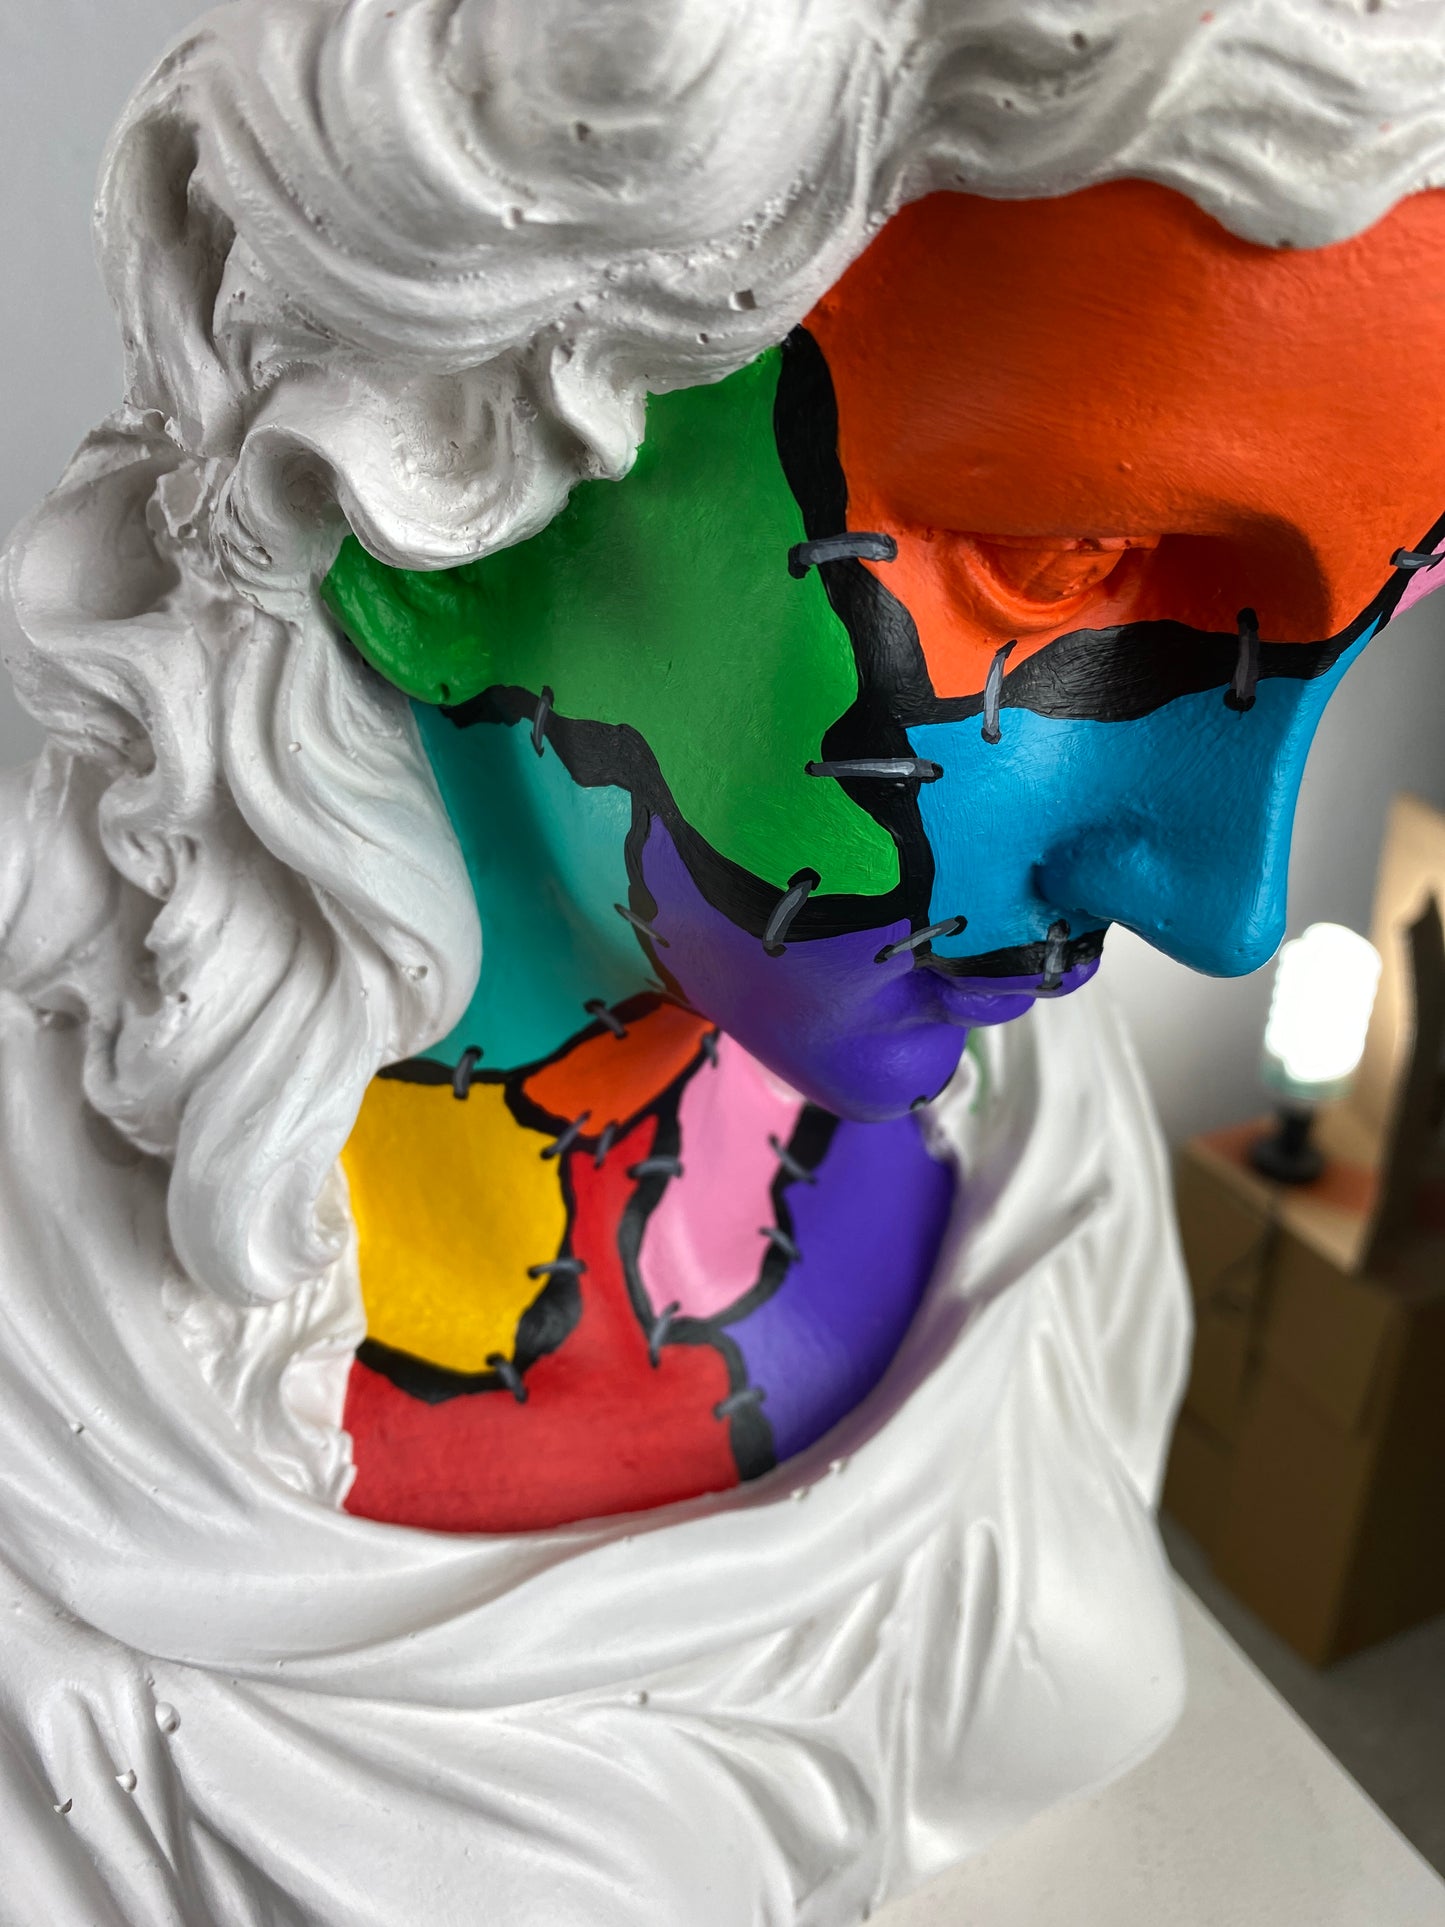 Hera 'White Zombie' Pop Art Sculpture, Modern Home Decor